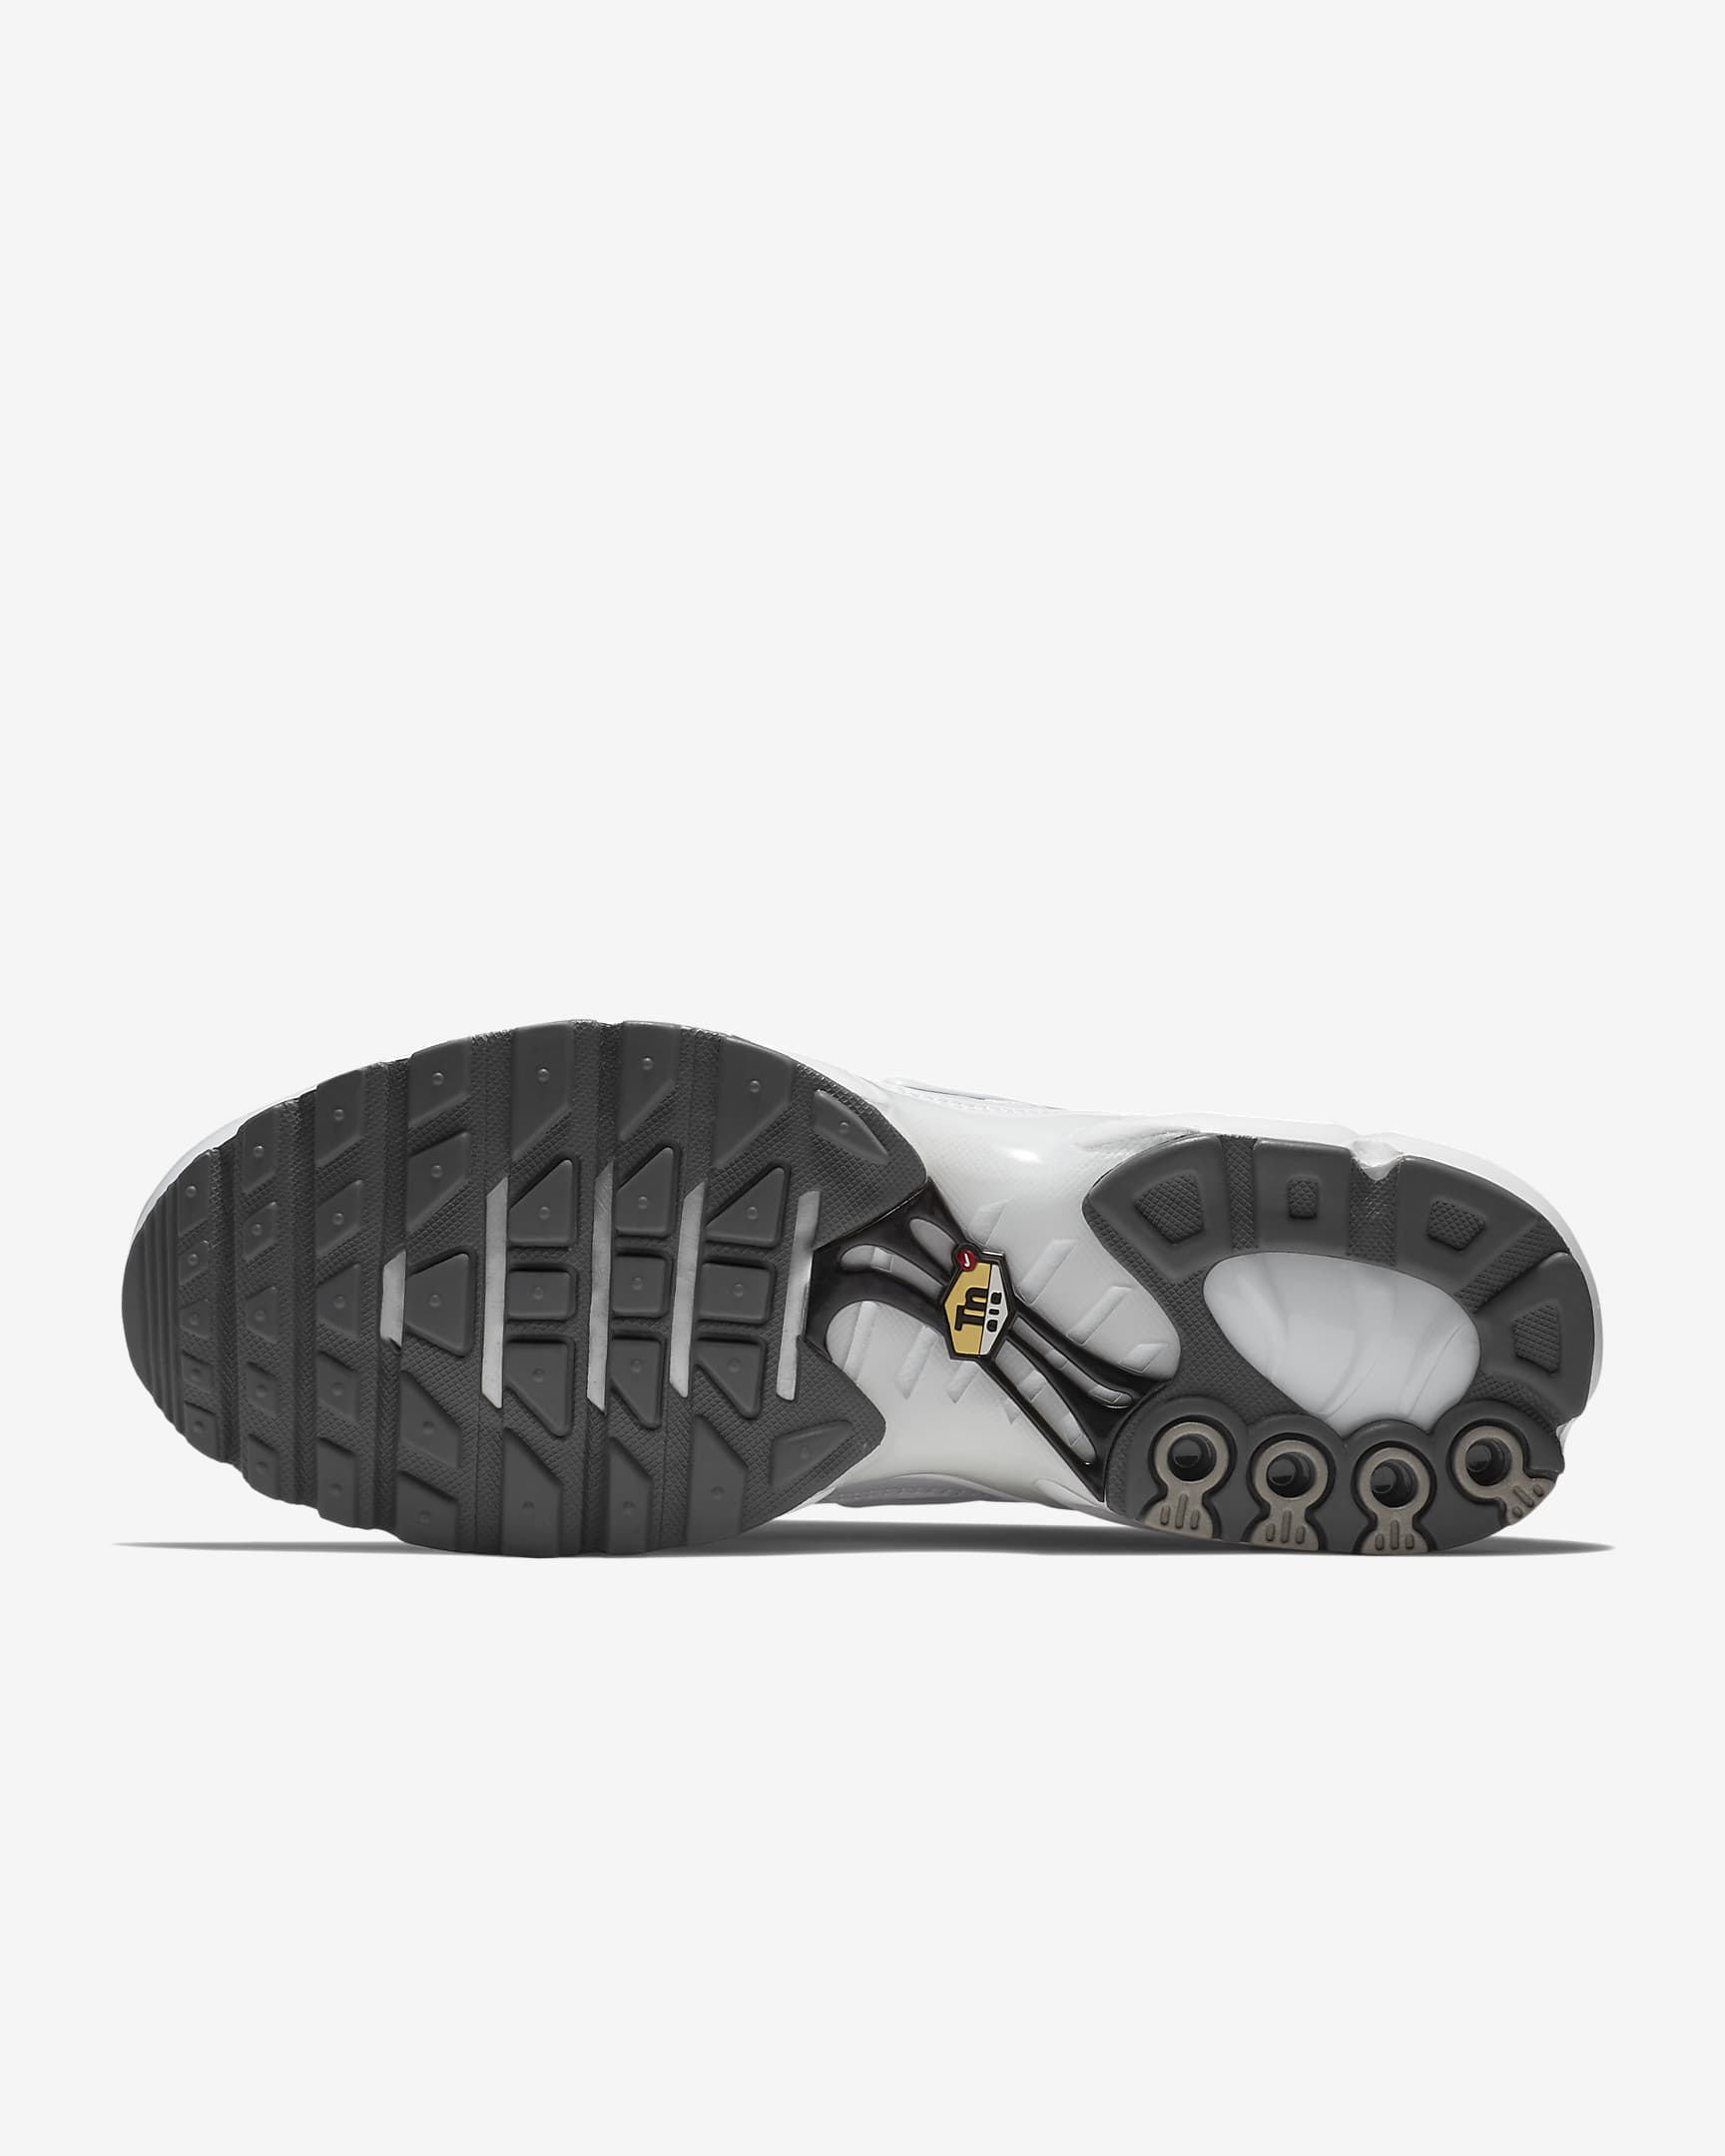 Nike Air Max Plus Men's Shoes - White/Black/Cool Grey/White